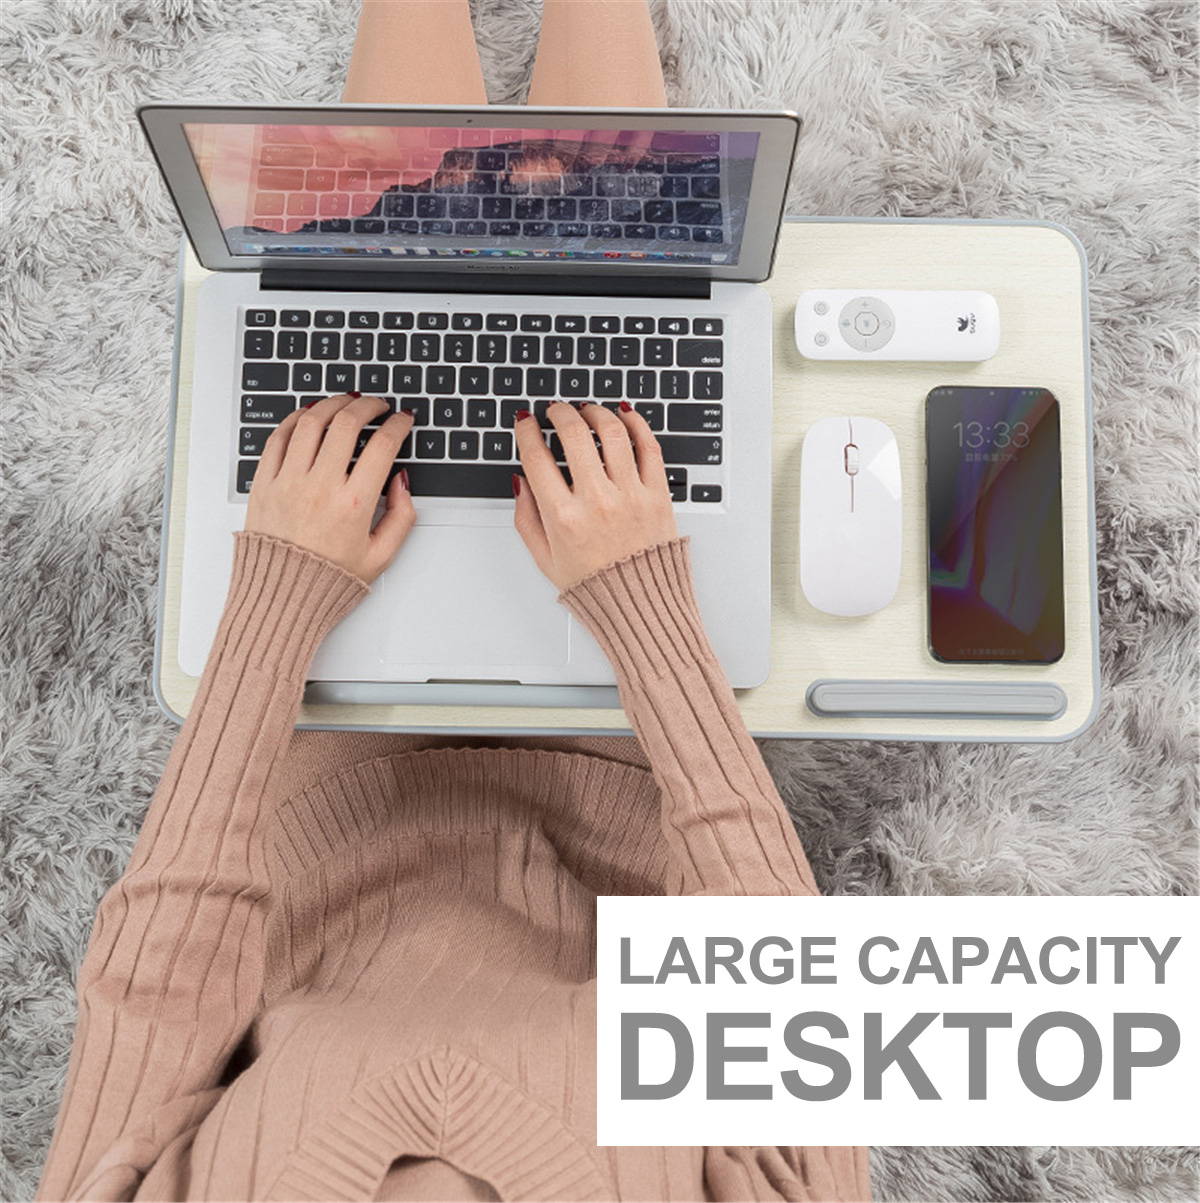 Universal-Folding-Height-Angle-Adjustable-Home-Bed-Macbook-Phone-Holder-Desk-1873295-10